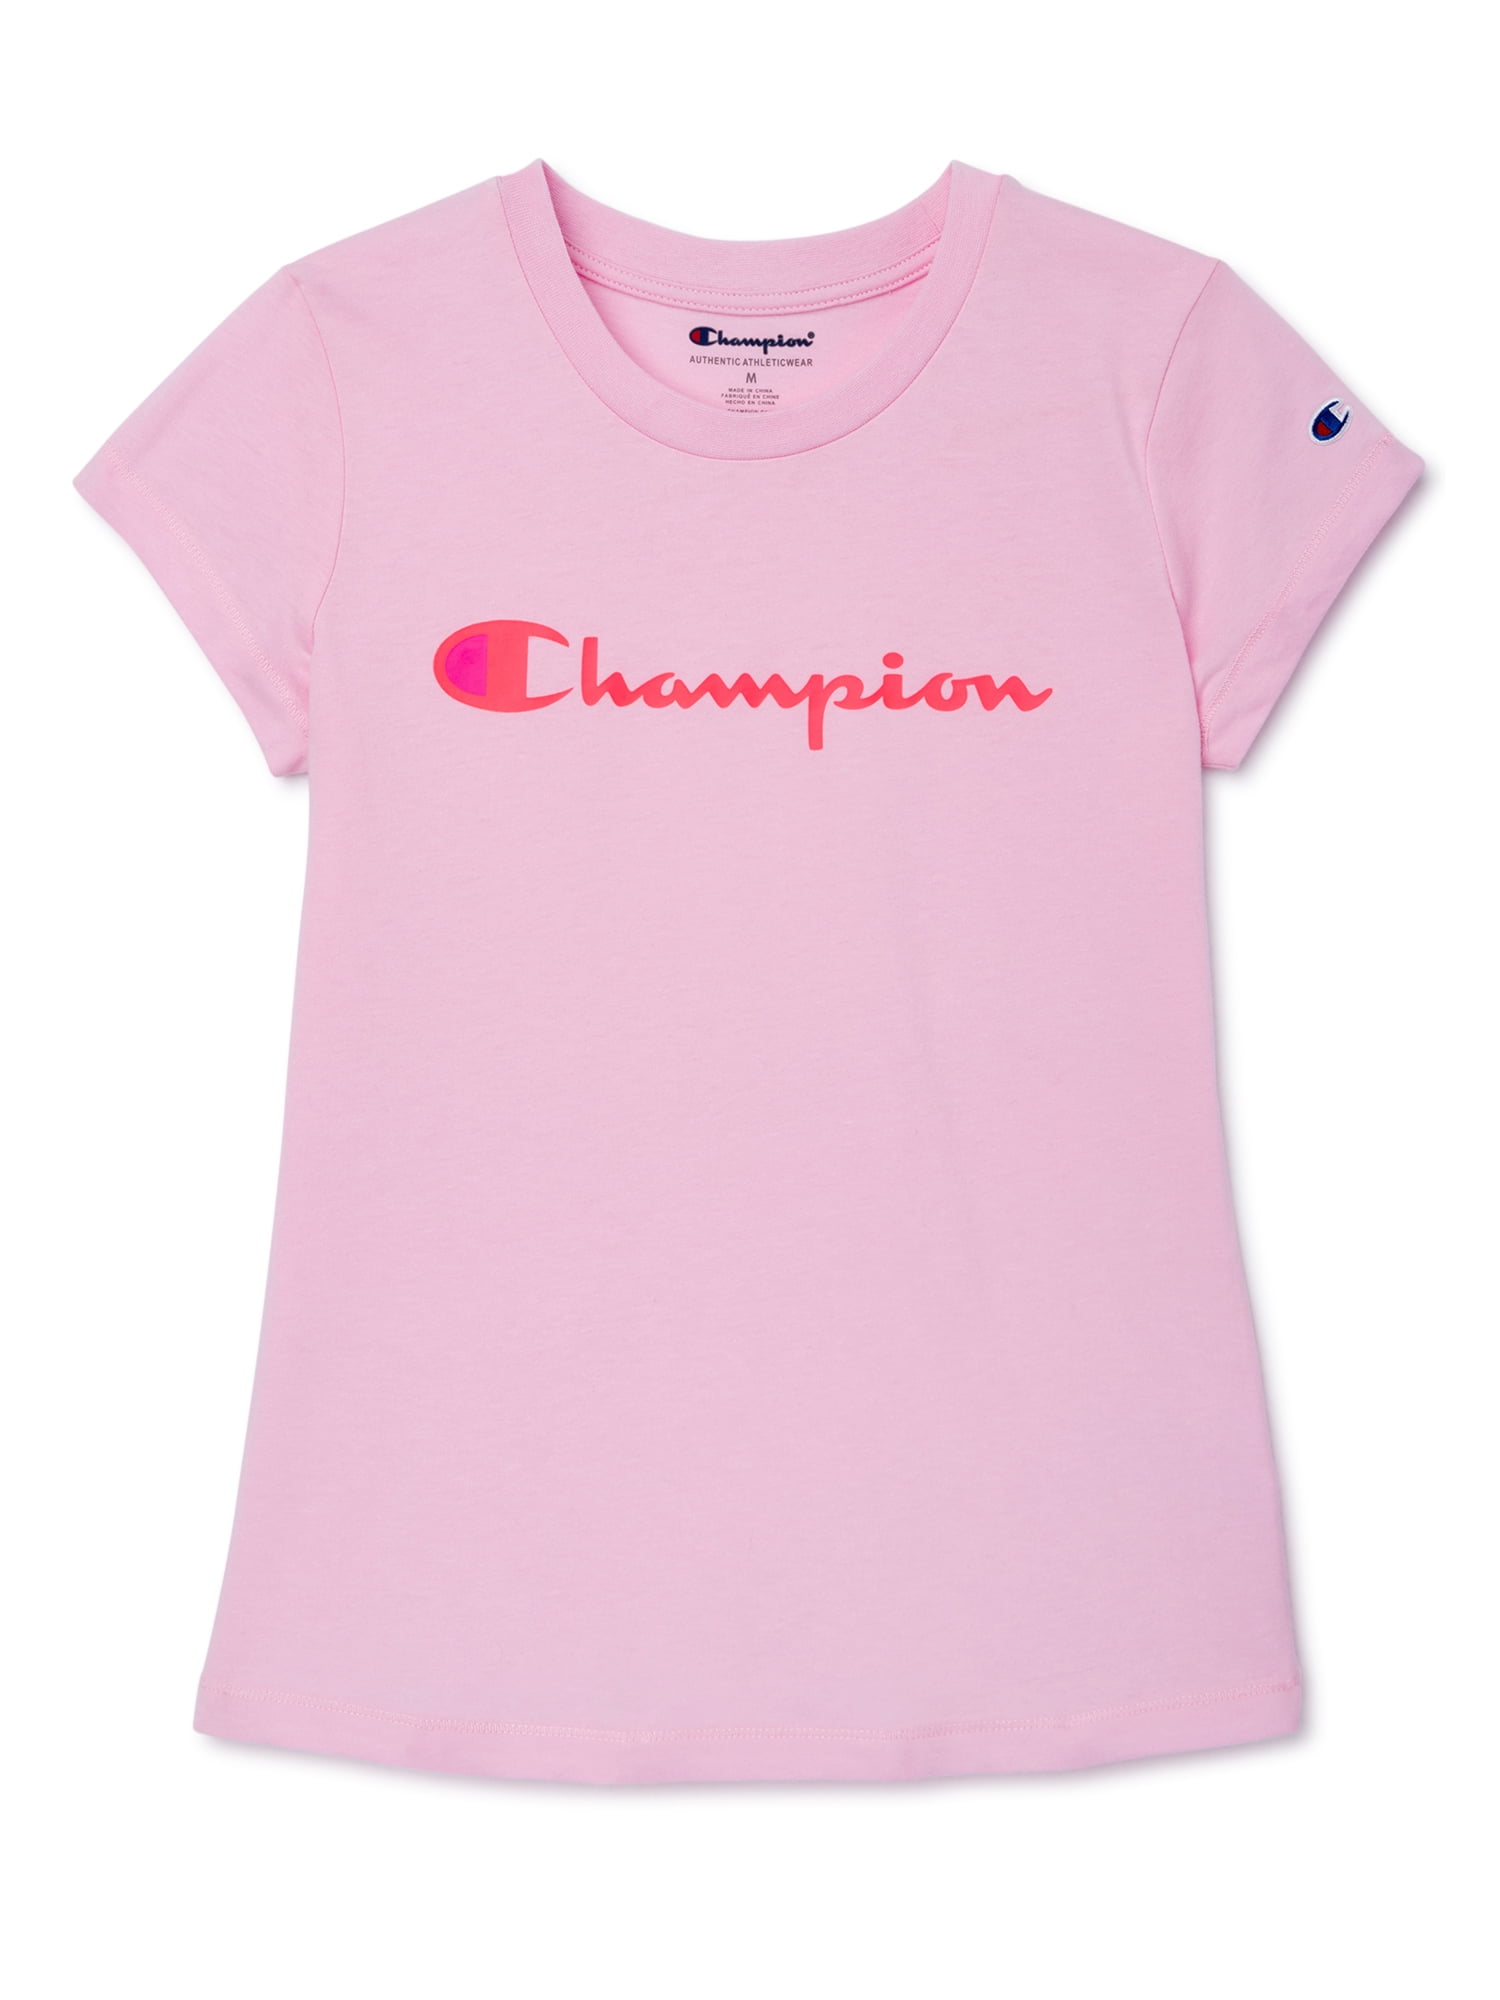 Champion Girls Original Logo Active T-Shirt, Sizes 7-16 - Walmart.com